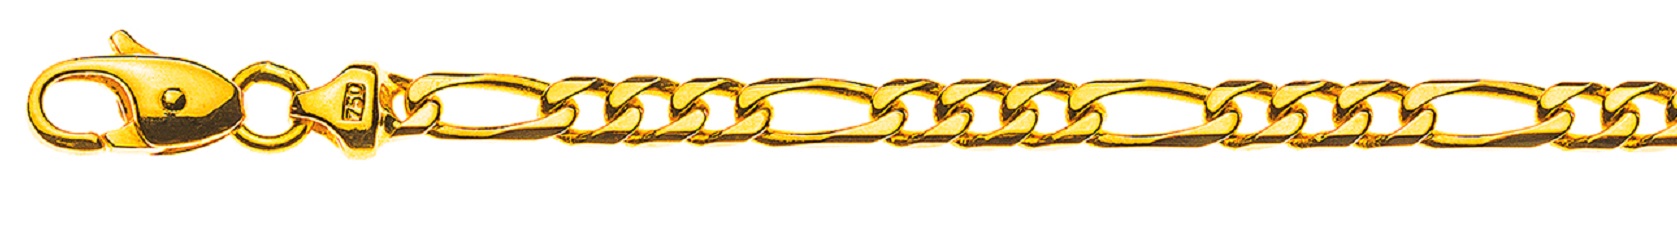 AURONOS Style Collier Figaro en or jaune 9K 45cm 4mm